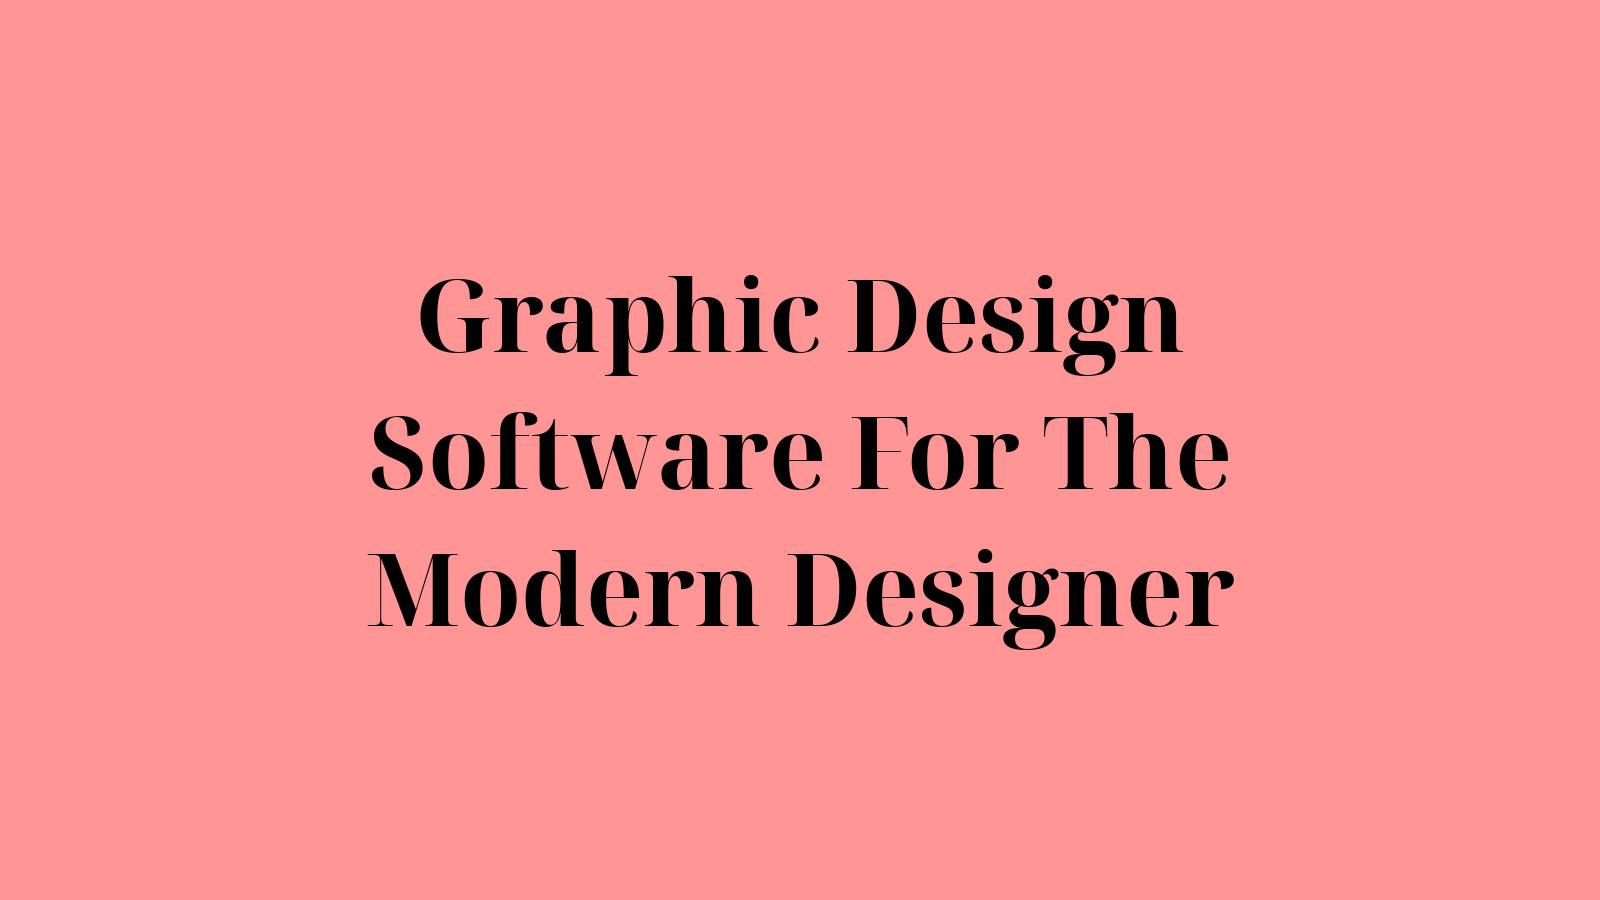 Graphic Design Software For The Modern Designer